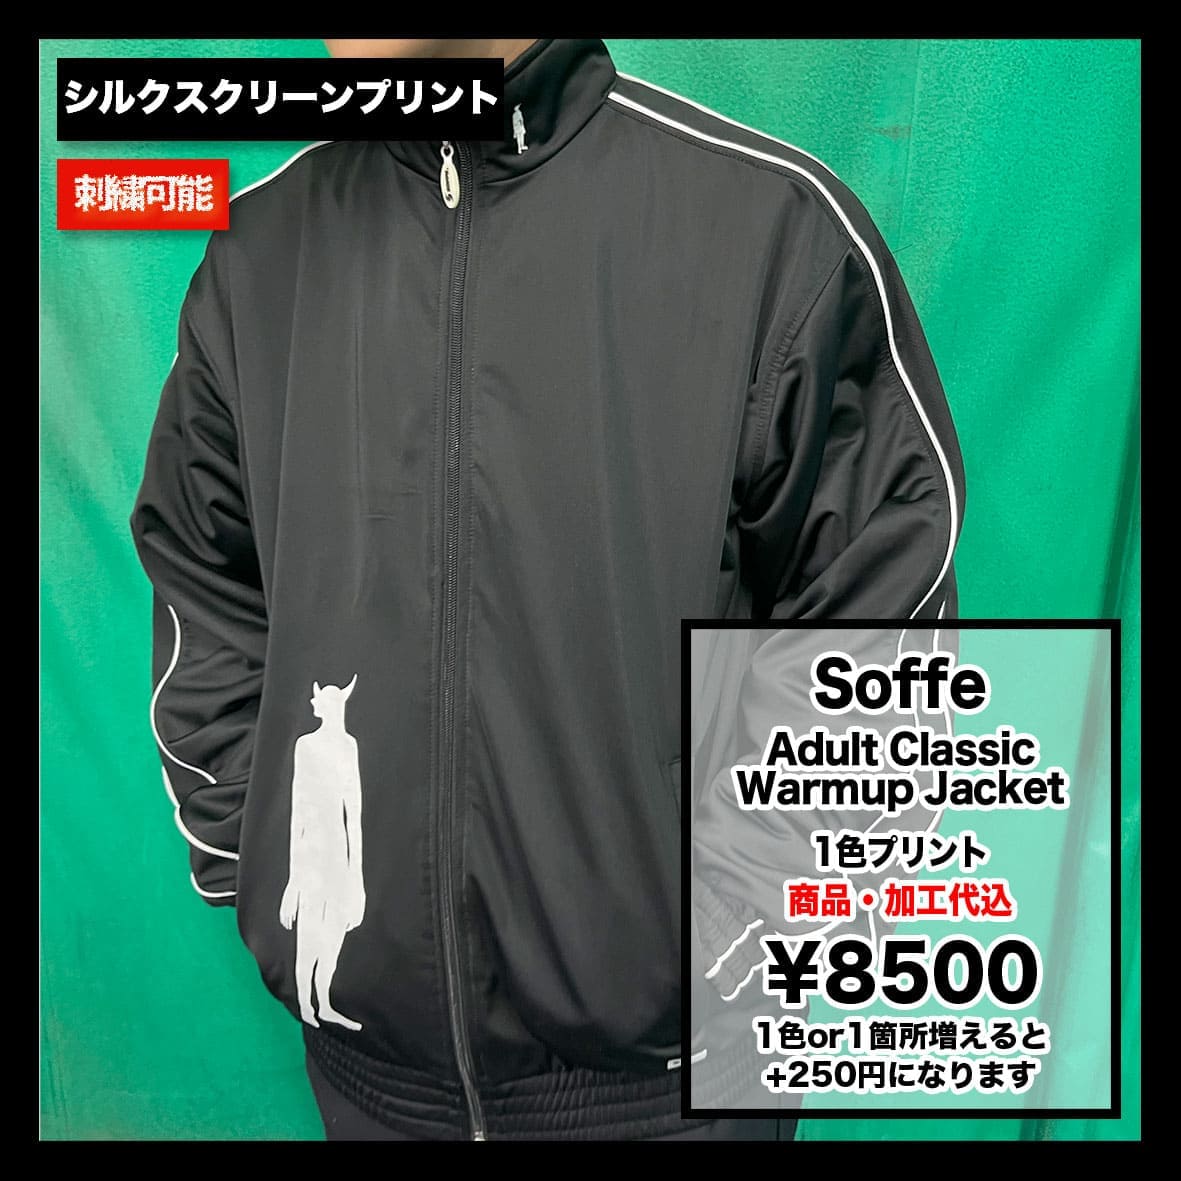 Soffe ソフィ Adult Classic Warmup Jacket (品番3265-O)